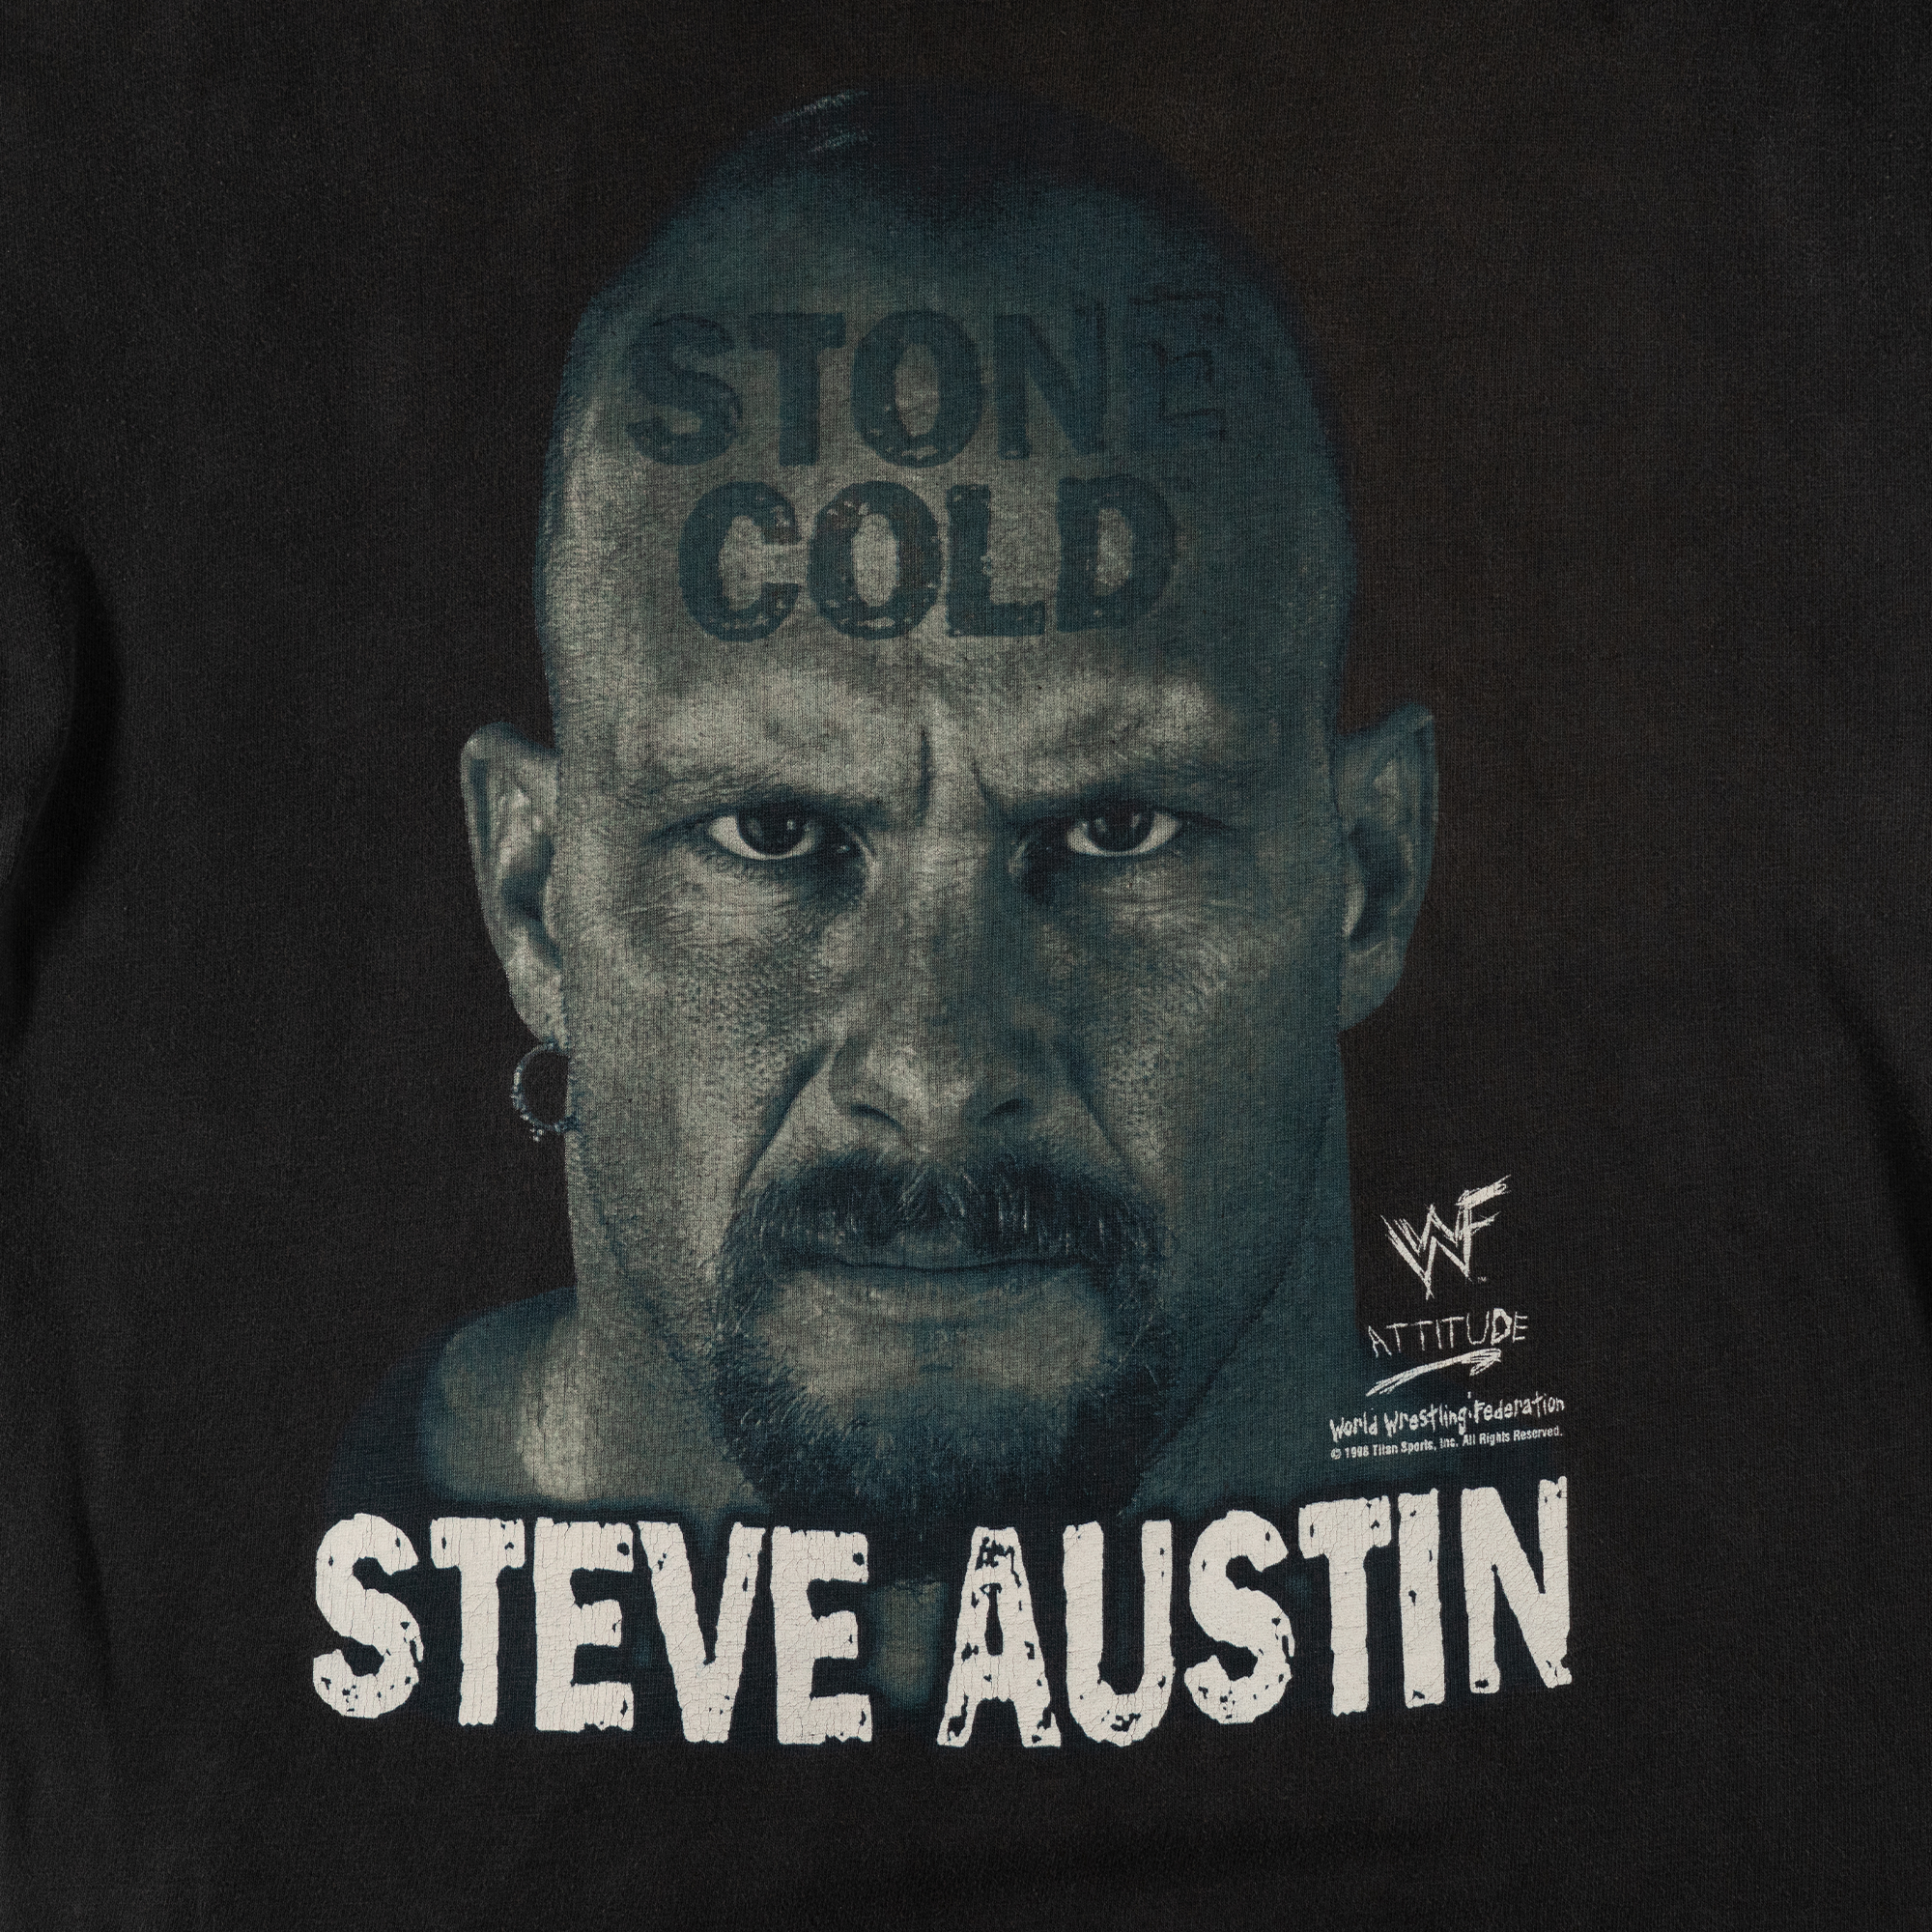 1998 Stone Cold Steve Austin Big Face Ultra Tag Tee Black-PLUS